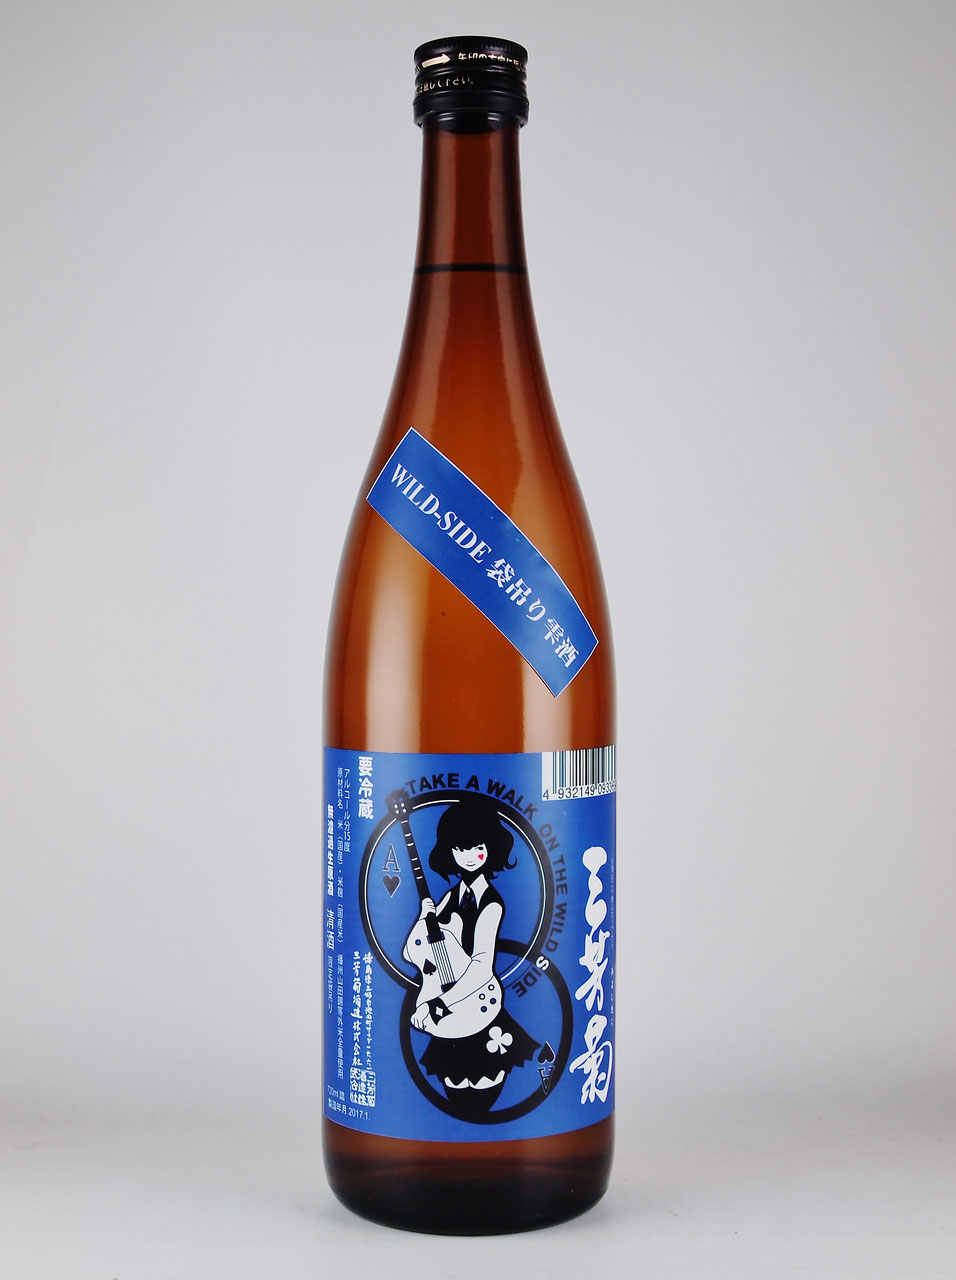 「三芳菊 WILD-SIDE 袋吊り雫酒」